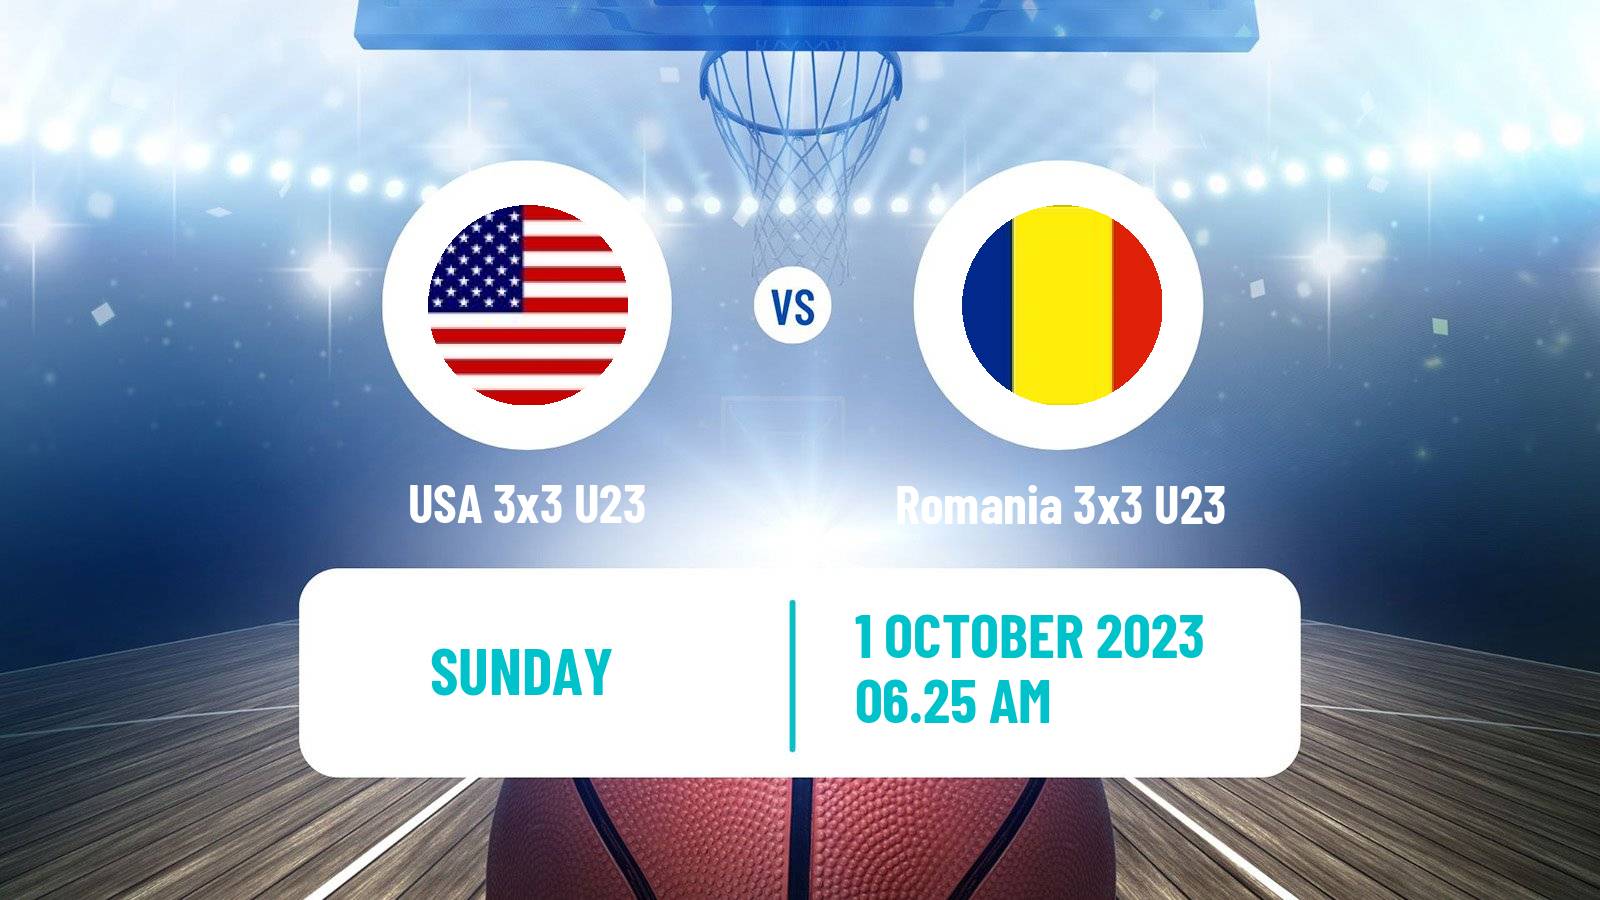 Basketball World Cup Basketball 3x3 U23 USA 3x3 U23 - Romania 3x3 U23